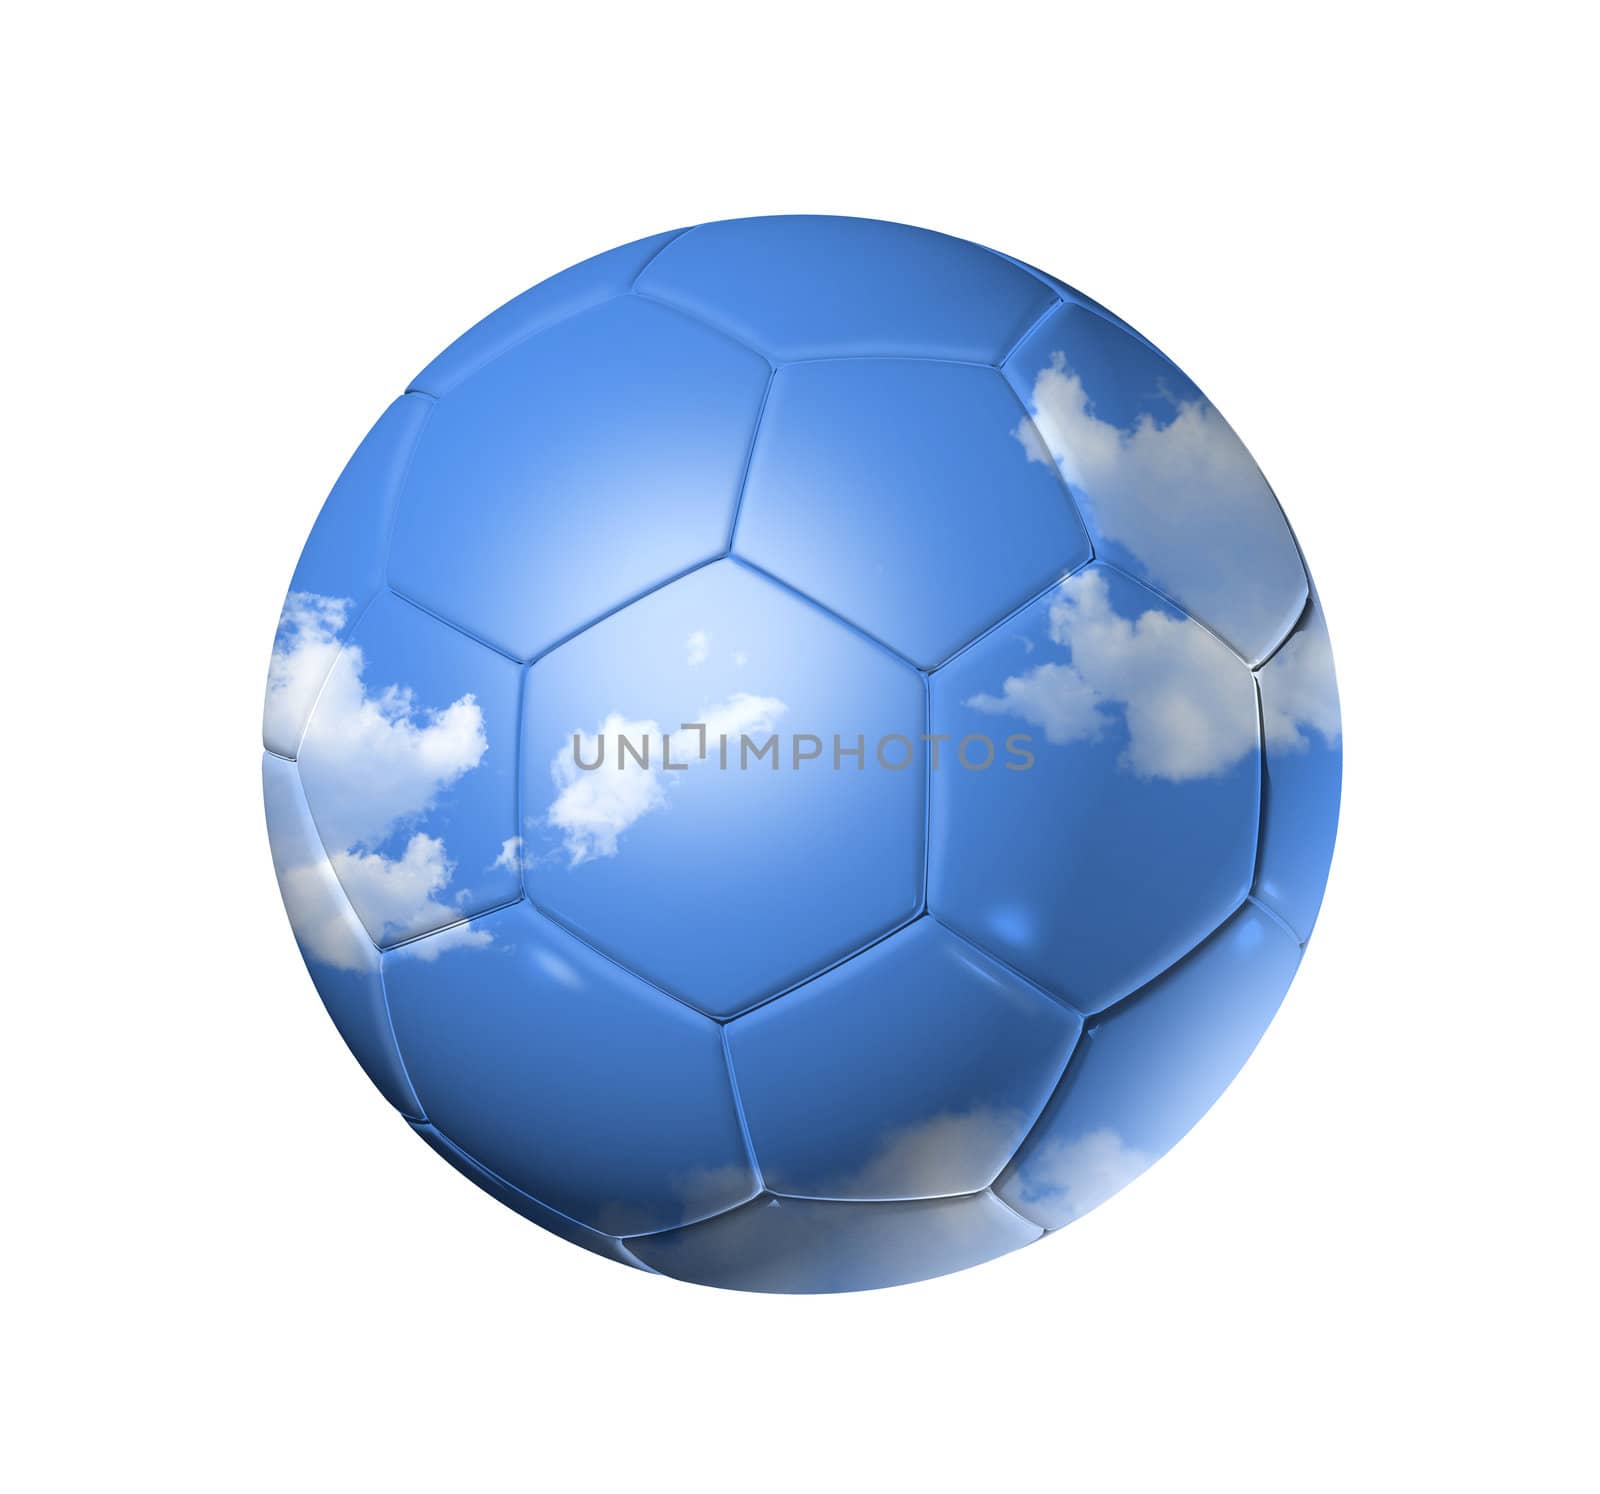 Sky on a soccer football ball by daboost